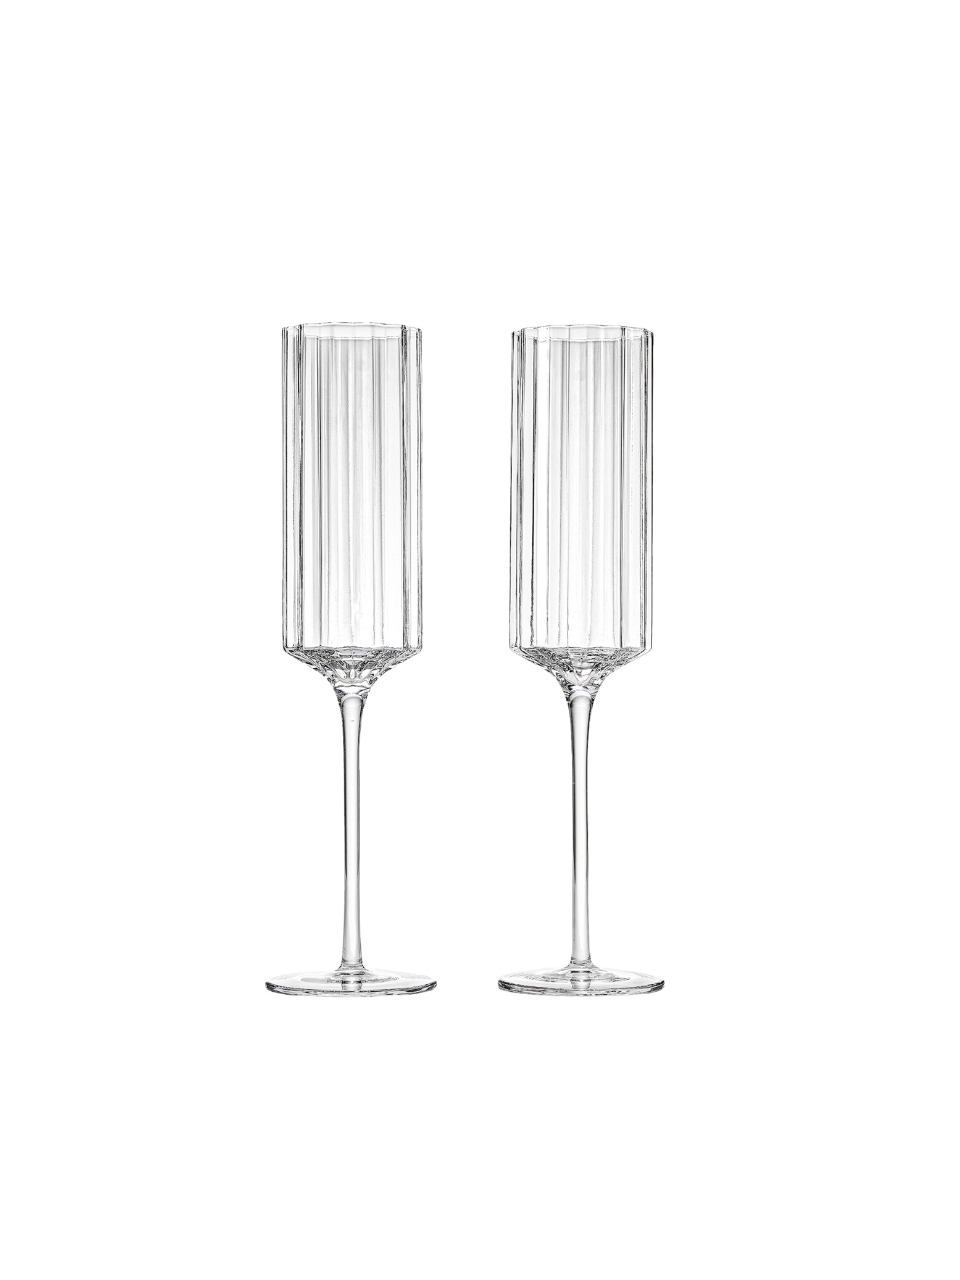 Modernism Cullinan Champagne Flute Glasses Set - modernismdesigns